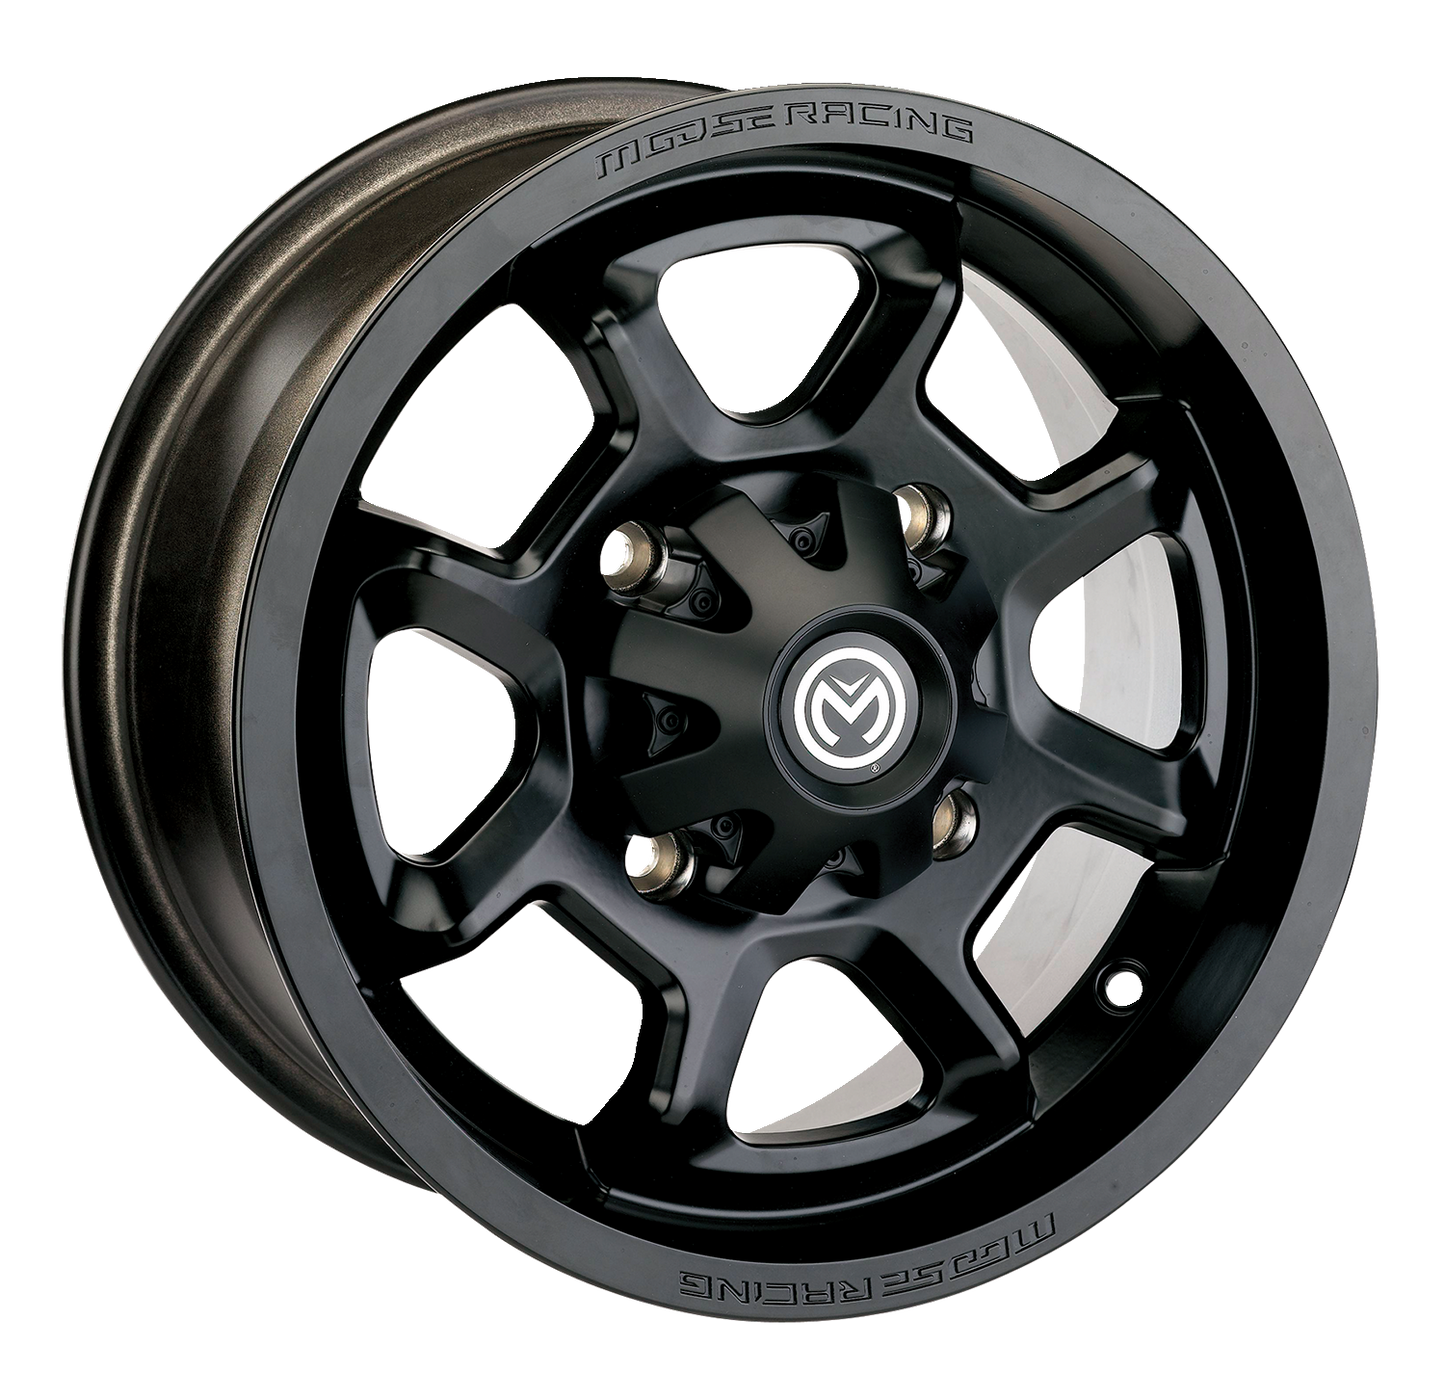 MOOSE UTILITY Wheel - 415X - Front - Black - 12x7 - 4/110 - 4+3 415MO127110MB4